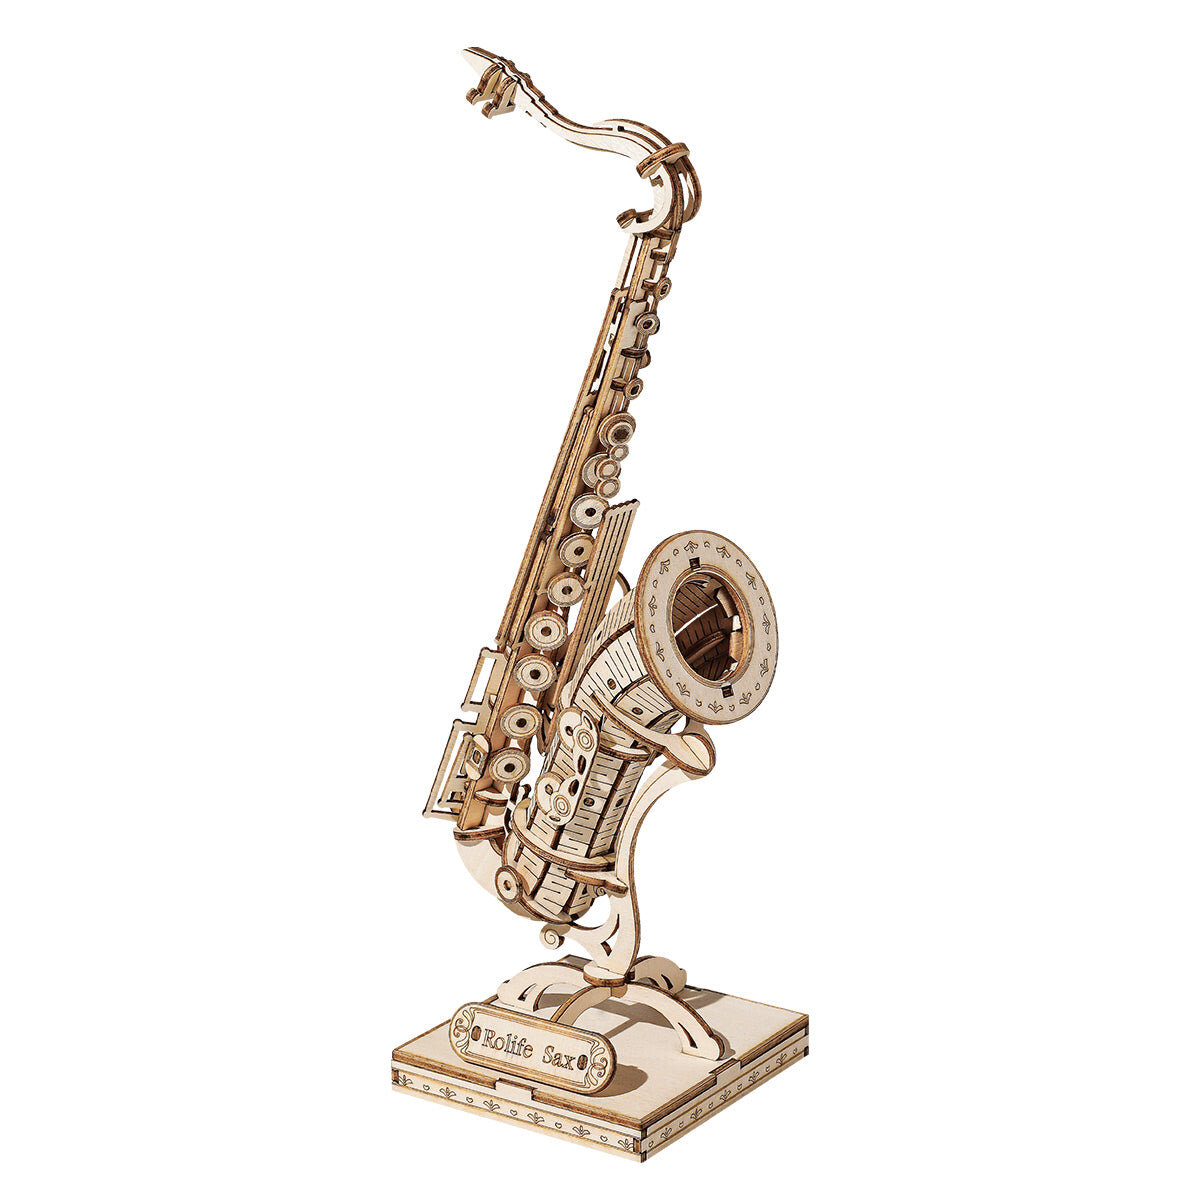 Rompecabezas 3D de madera - Saxofón Rolife TG309